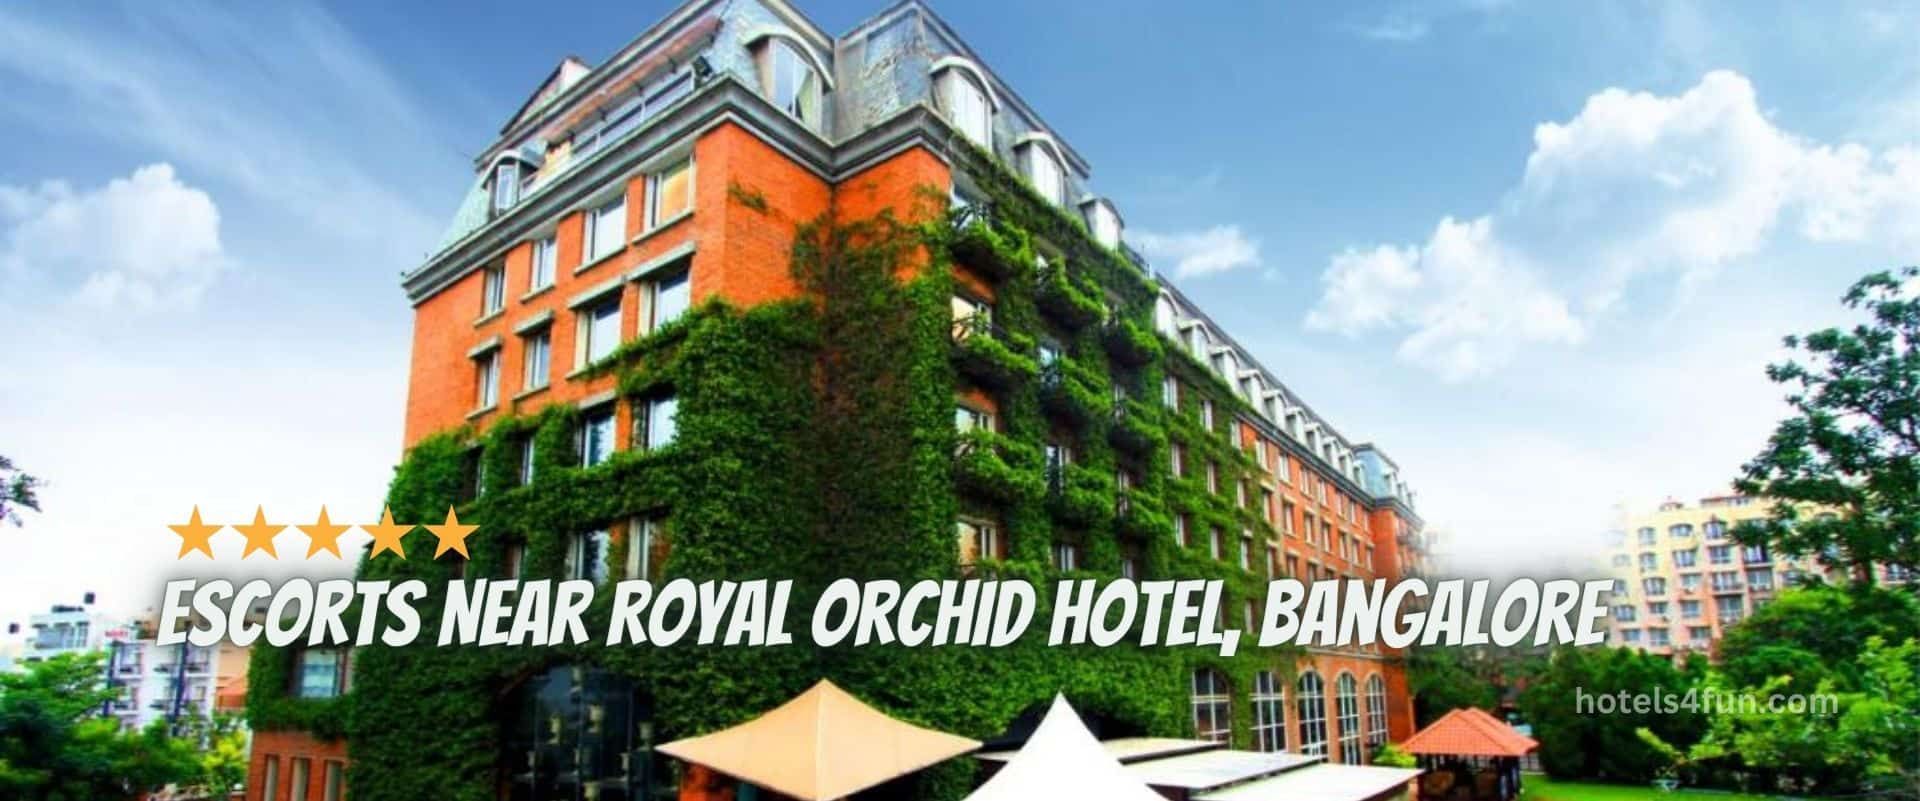 Royal Orchid Hotel Bangalore